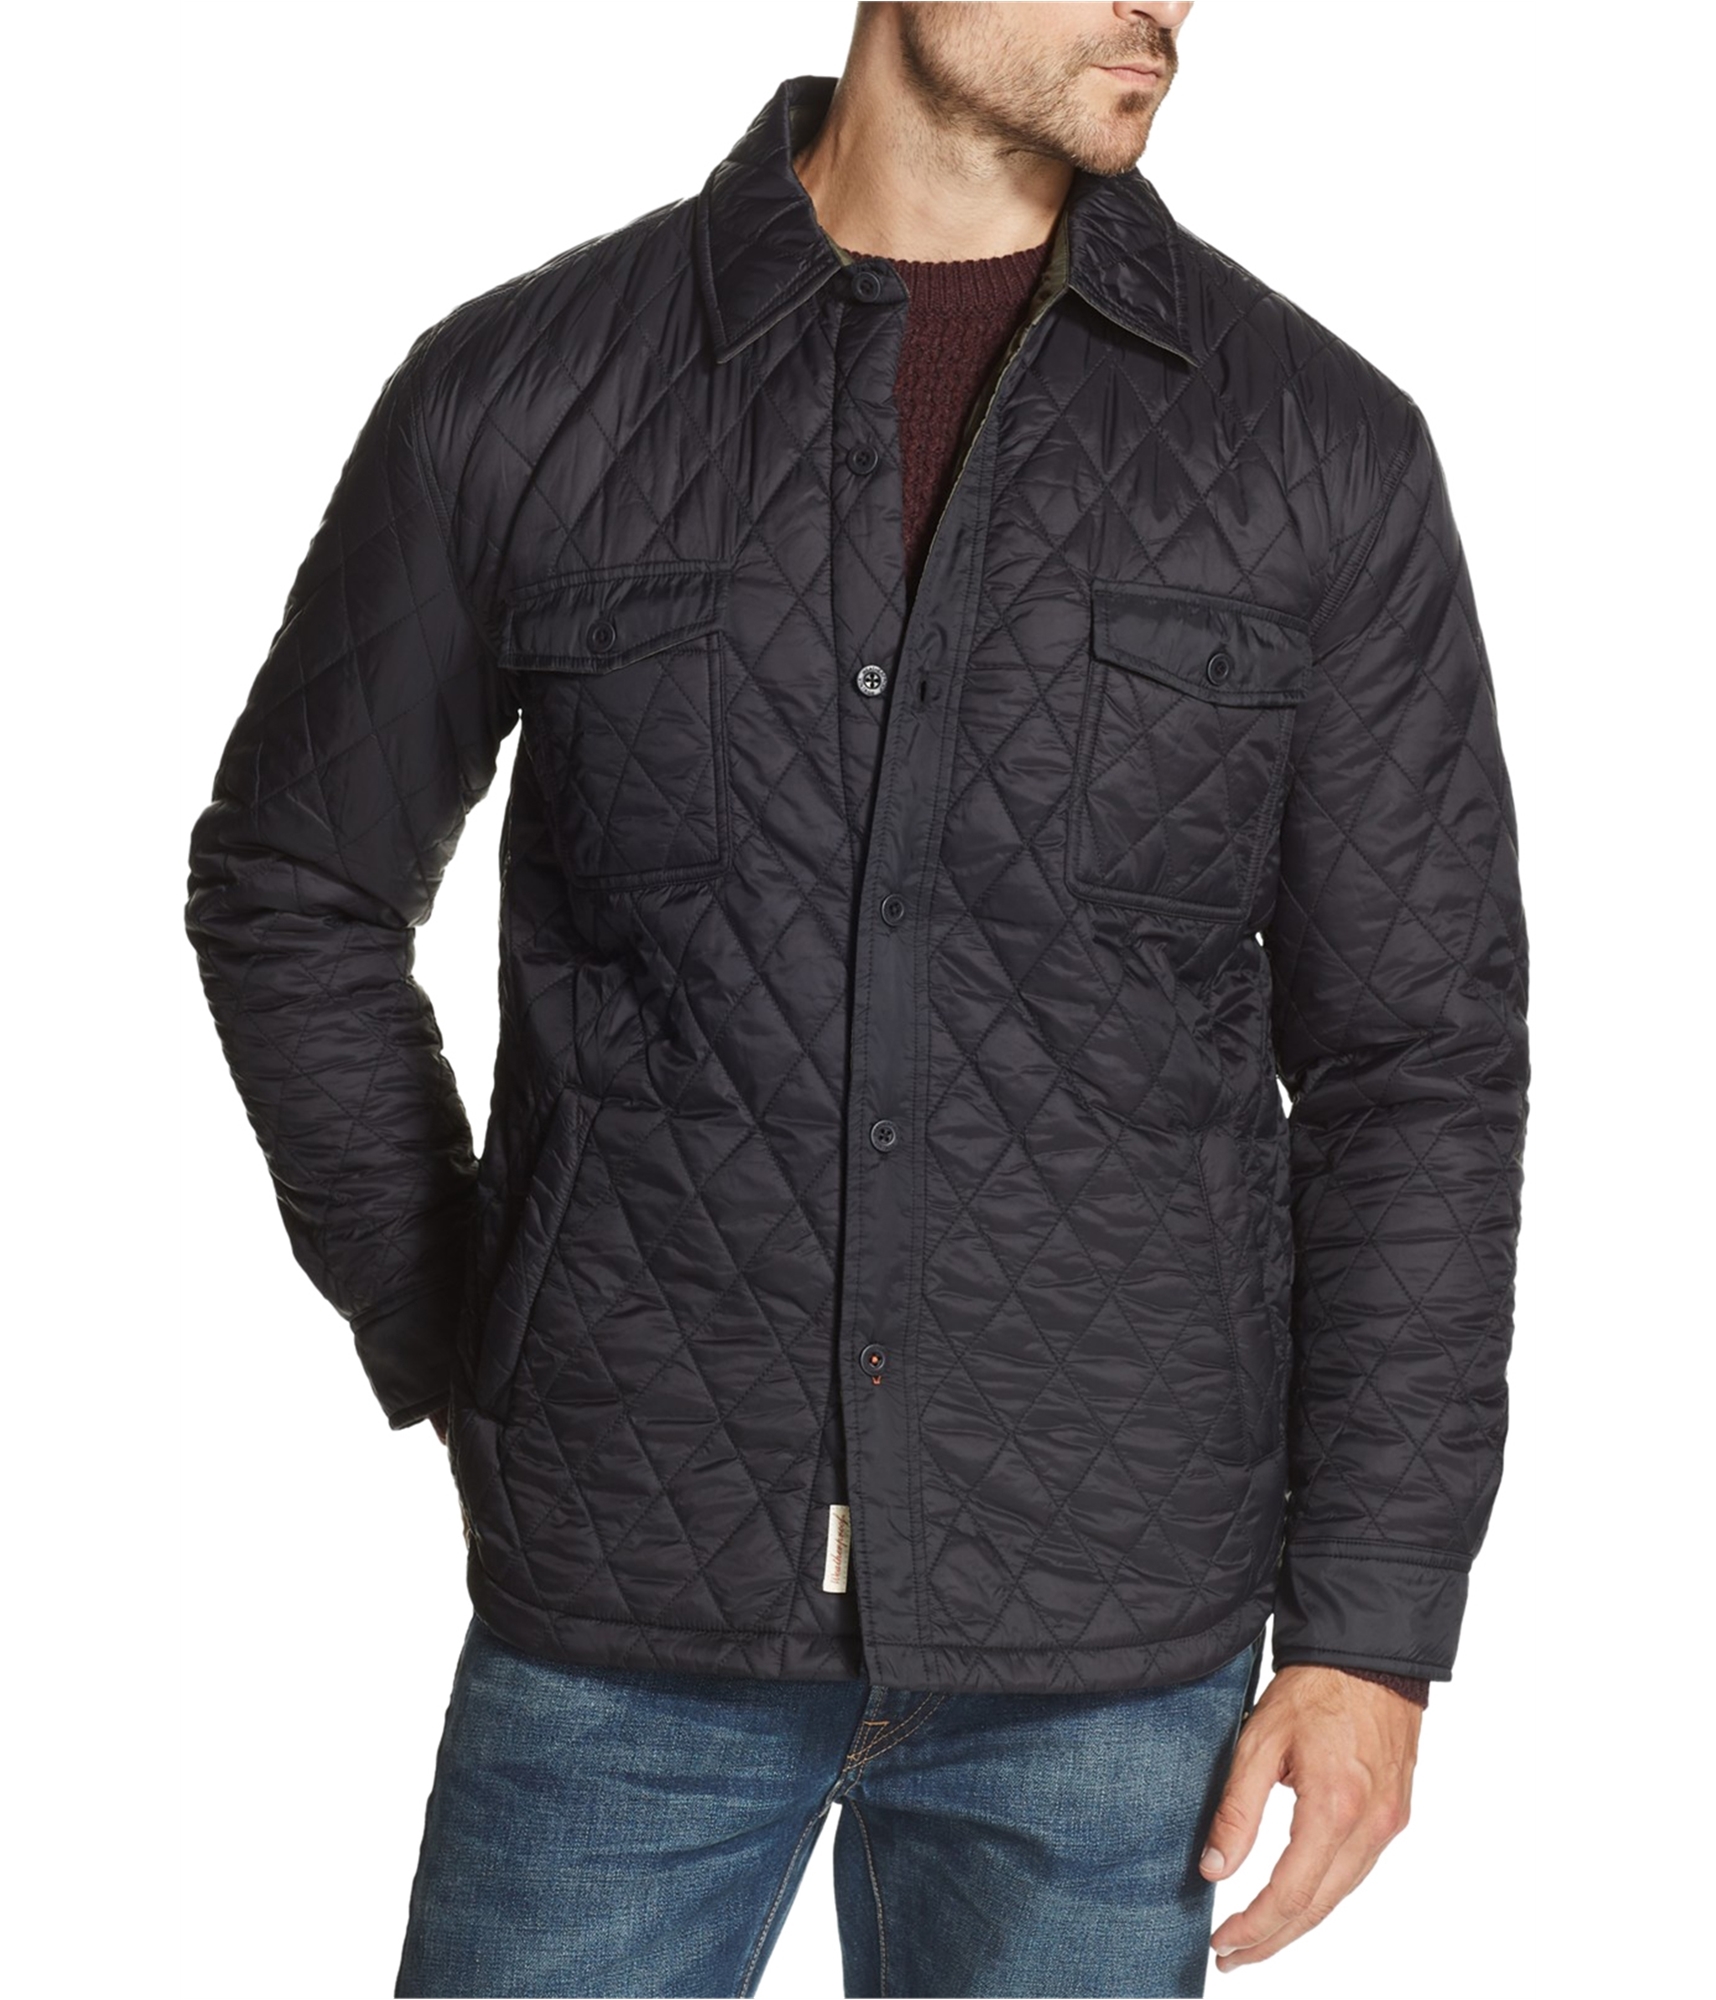 Buy a Weatherproof Mens Quilted Jacket | Tagsweekly